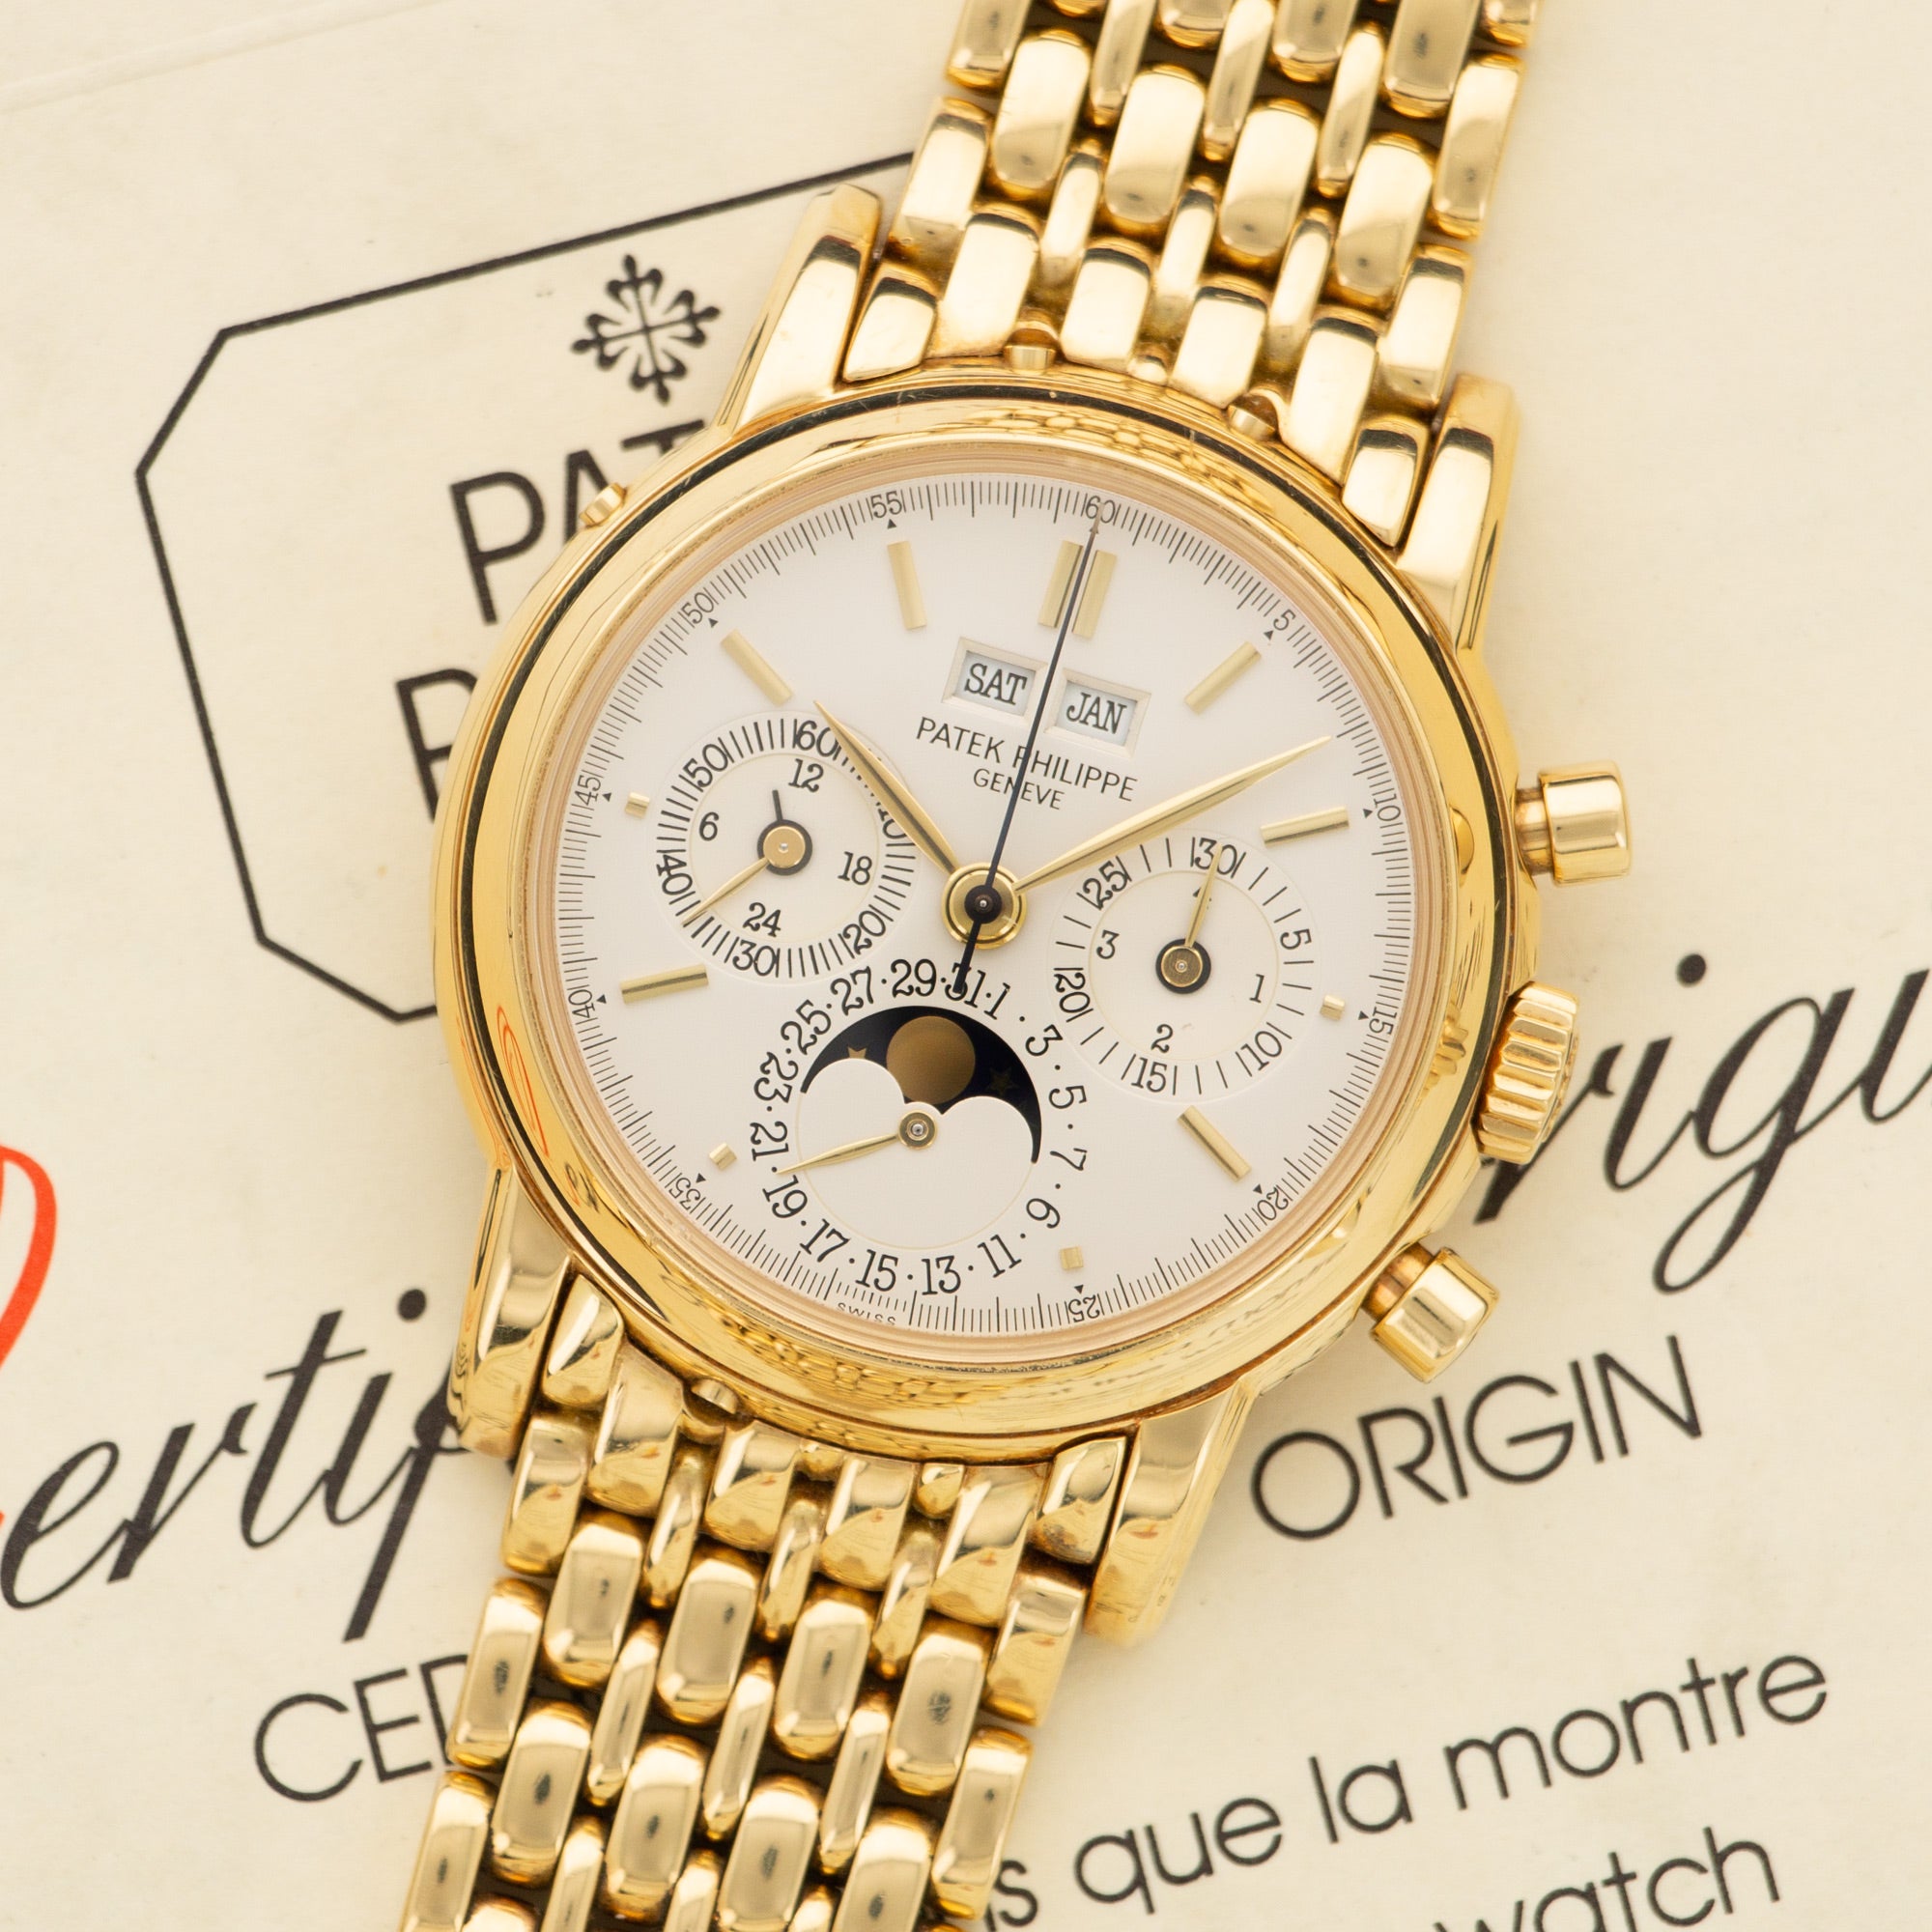 Patek Philippe - Patek Philippe Yellow Gold 2nd Series Perpetual Calendar Chrono Watch Ref. 3970 - The Keystone Watches